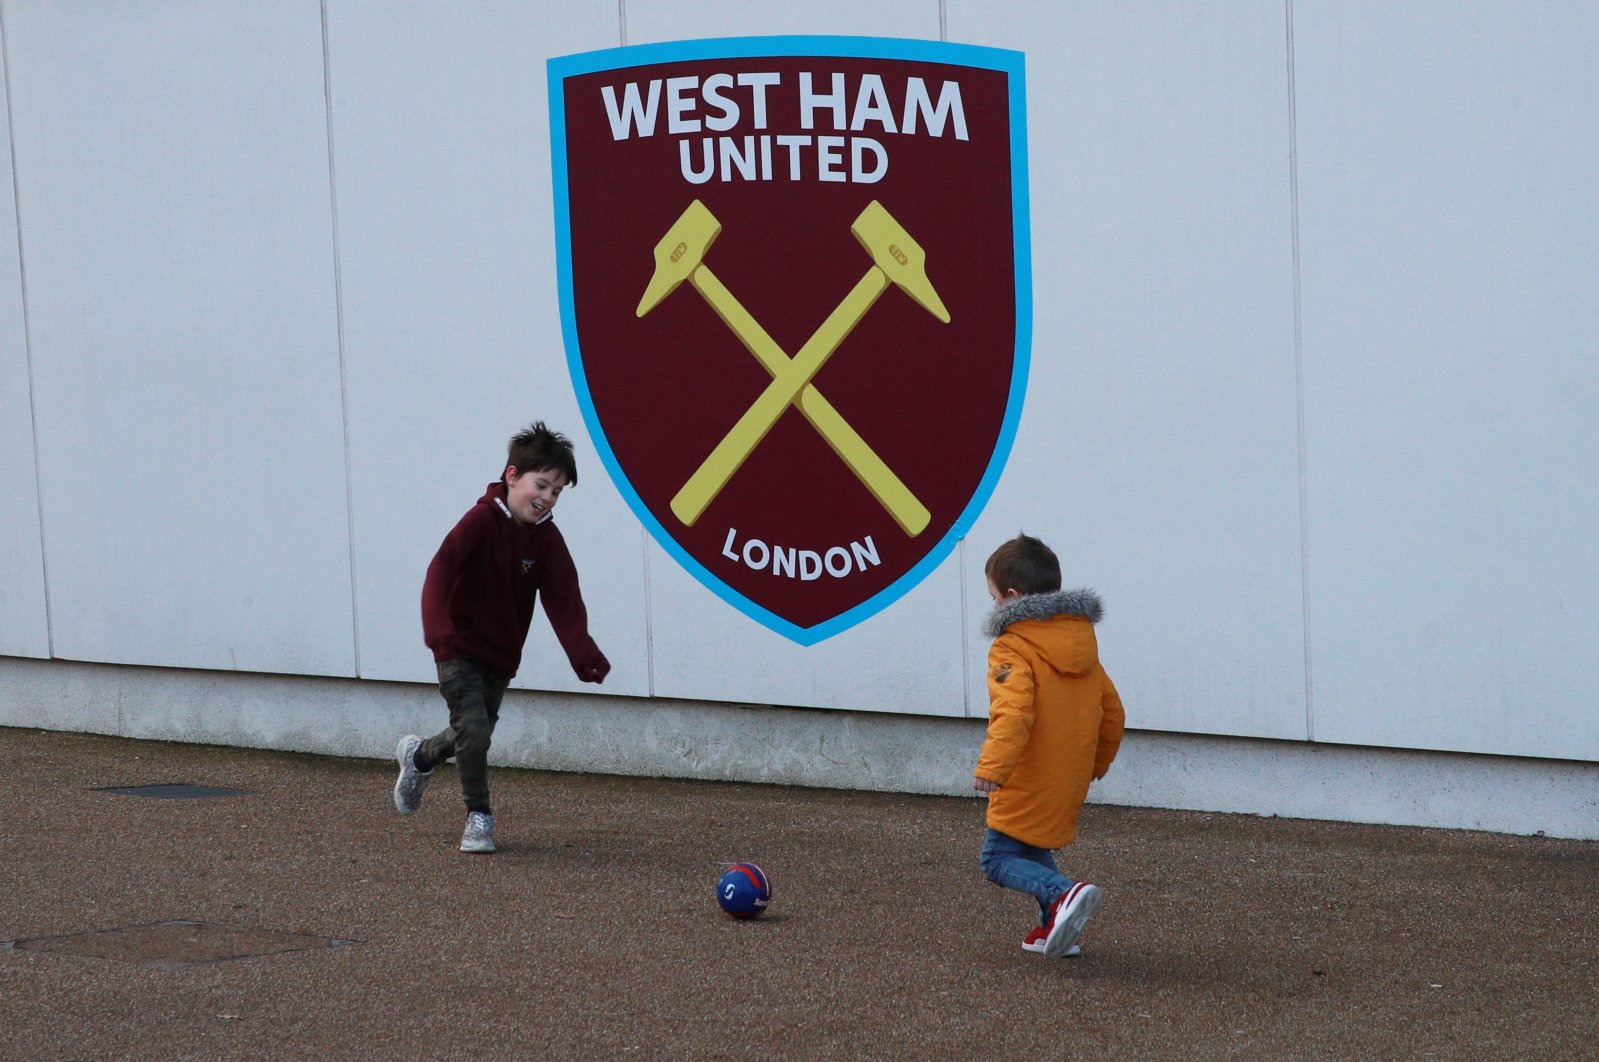 Children play football outside a stadium in London, U.K., Feb. 1, 2020. (Reuters Photo)